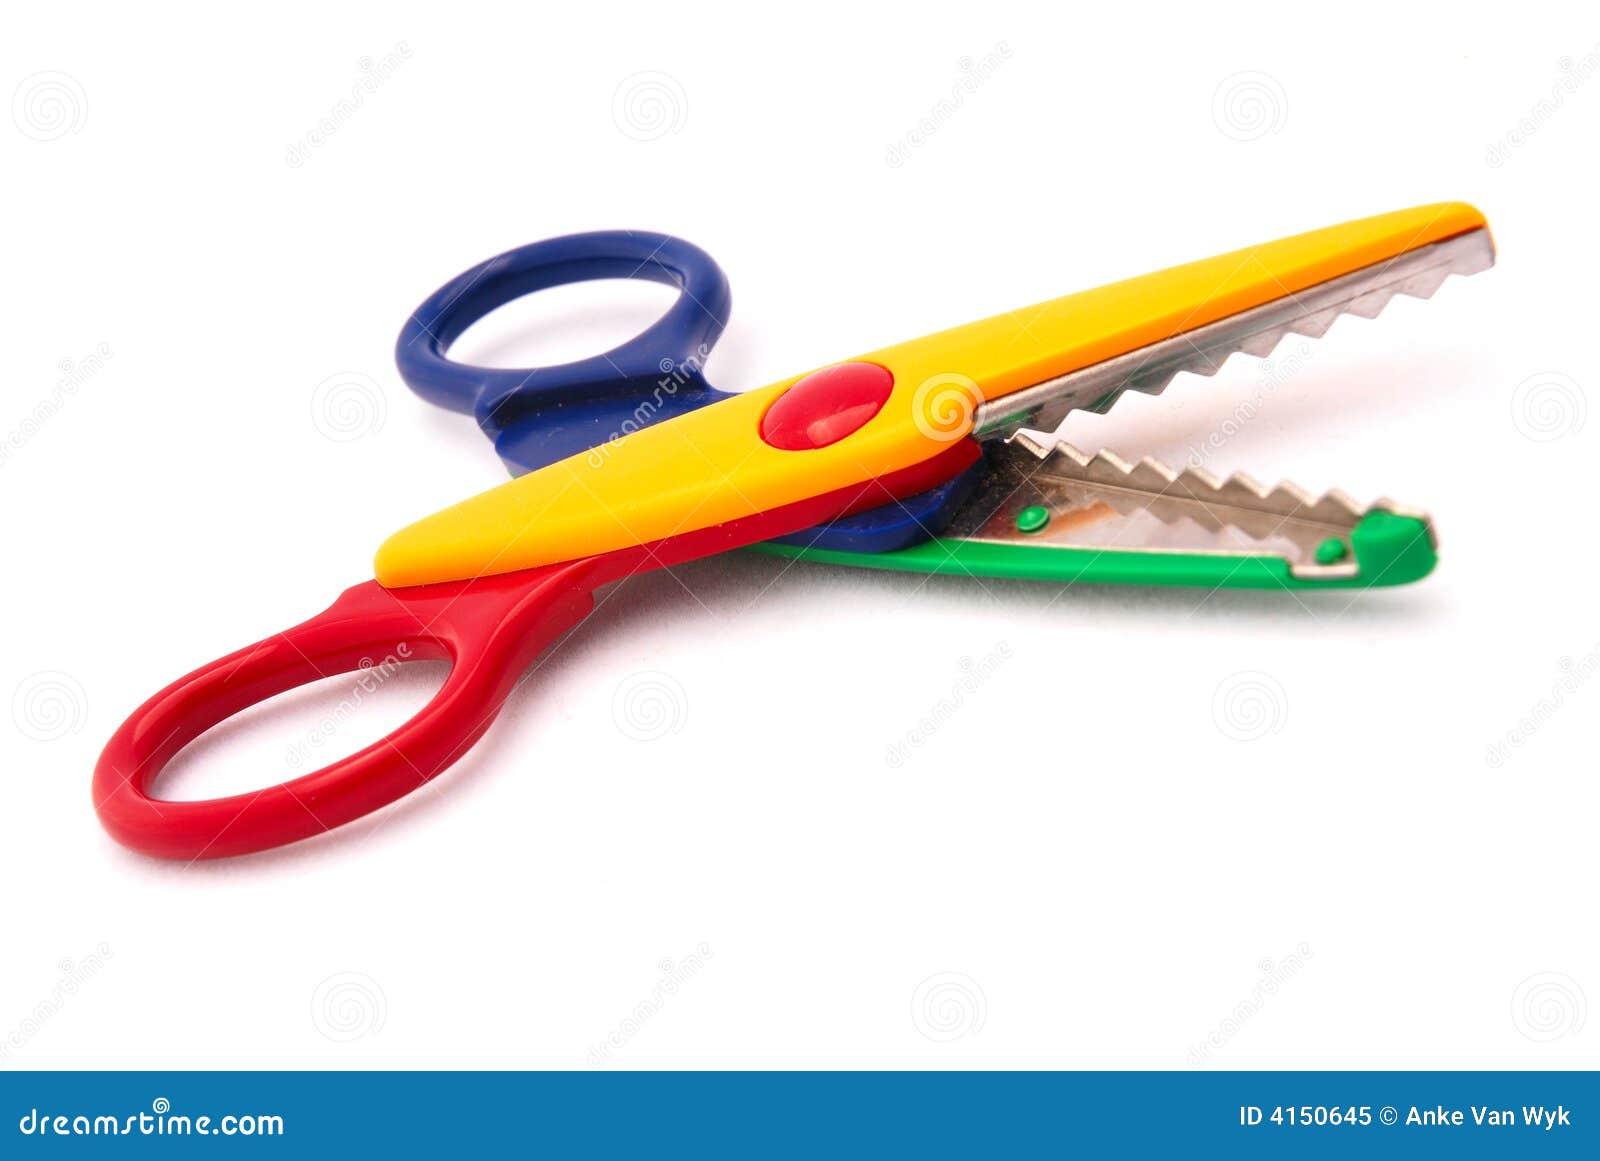 Zigzag scissors for art stock image. Image of zigzag - 51708101